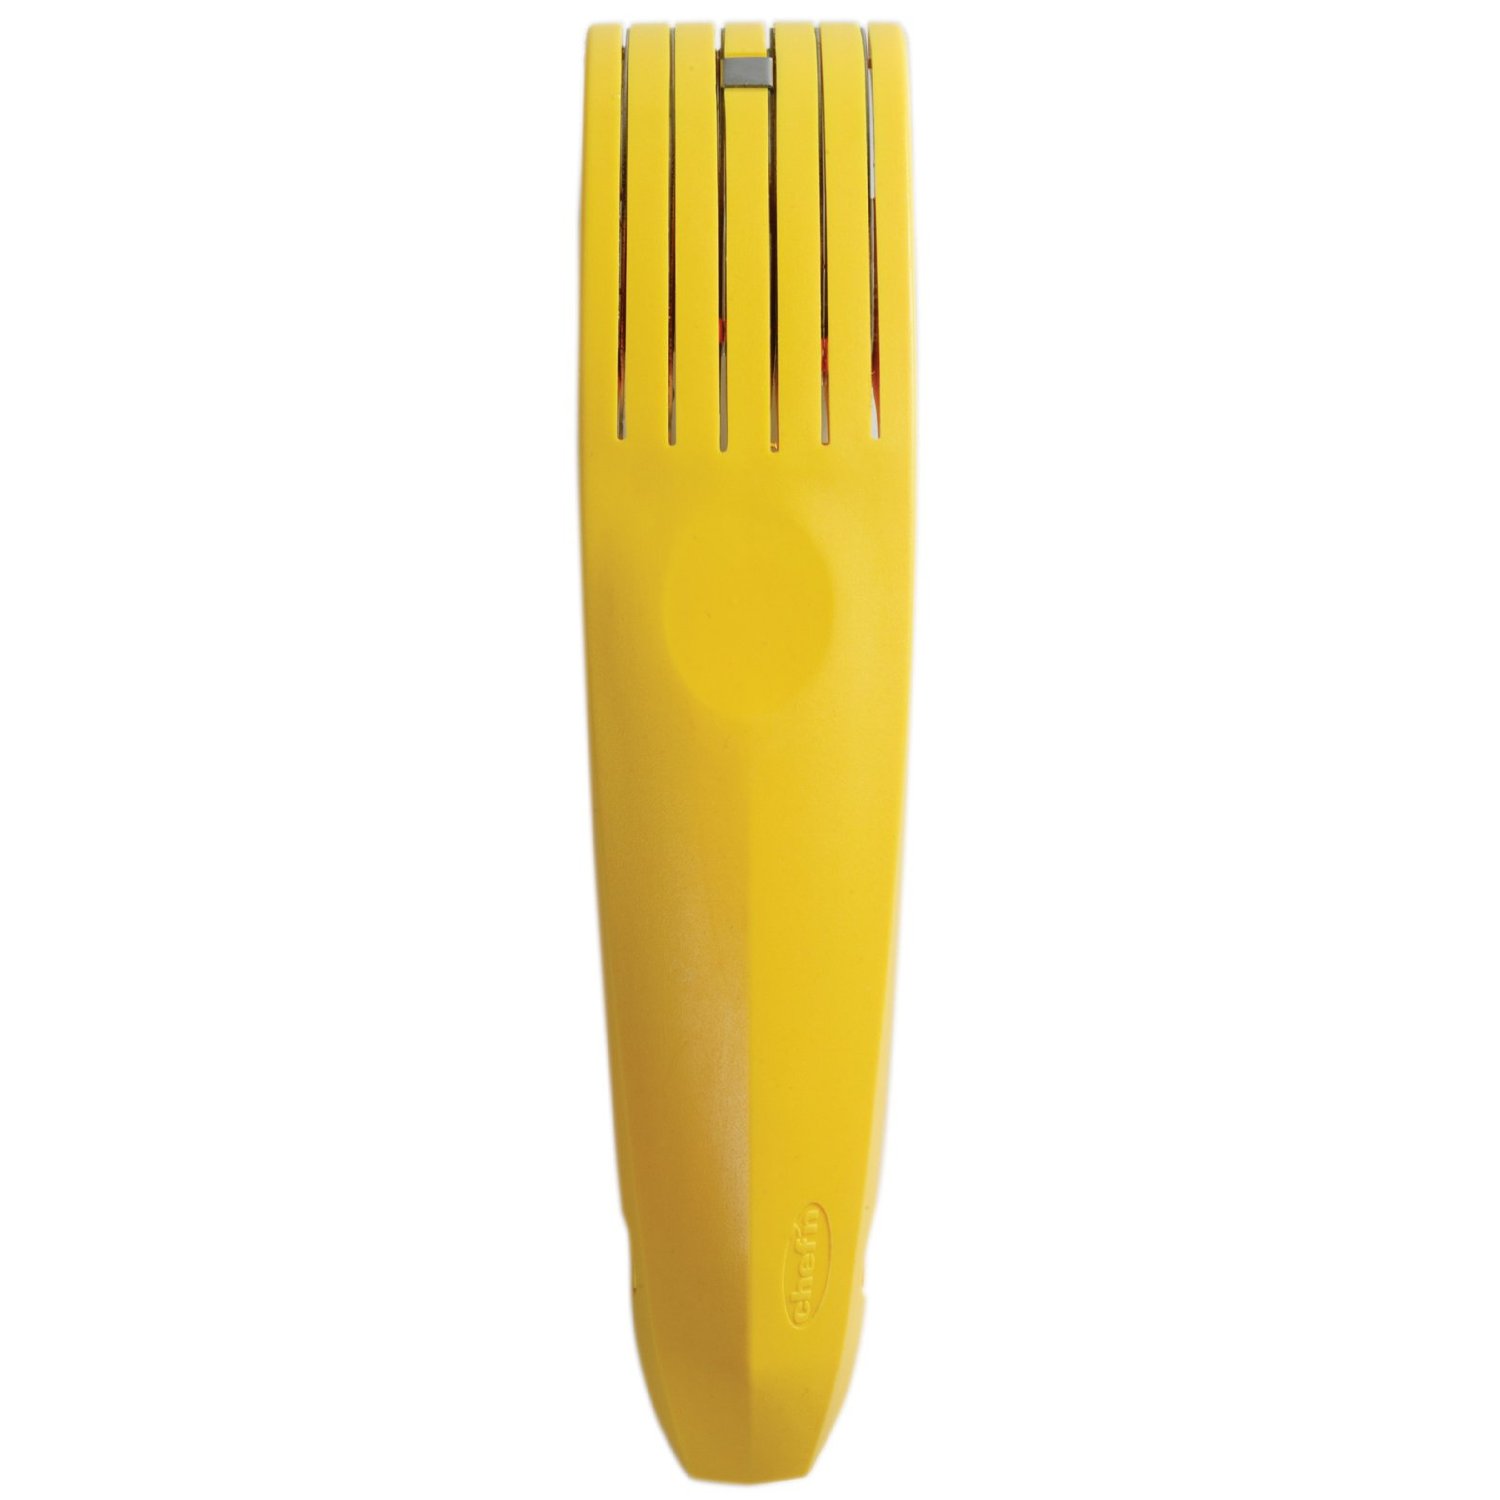 Plastic Banana Slicer ($13 Off Limited Offer) - Inspire Uplift